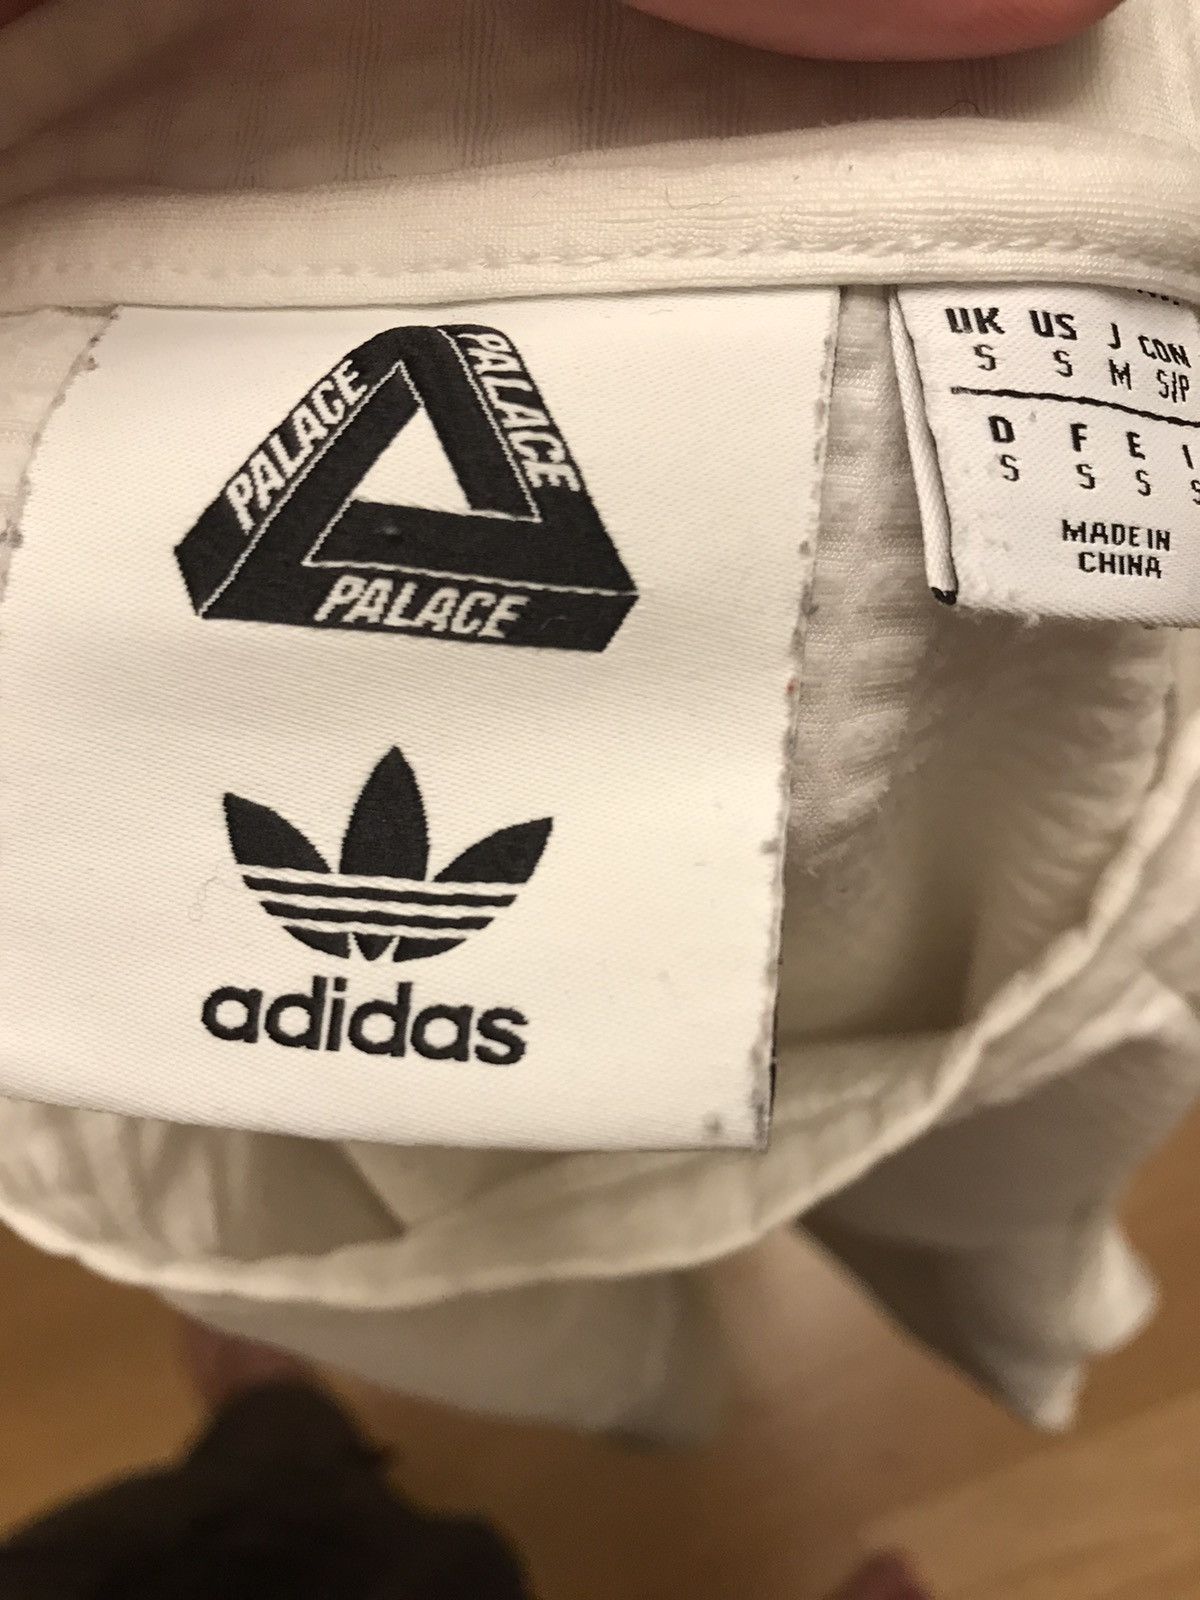 Adidas Adidas x Palace sweatshirt Size US S / EU 44-46 / 1 - 2 Preview